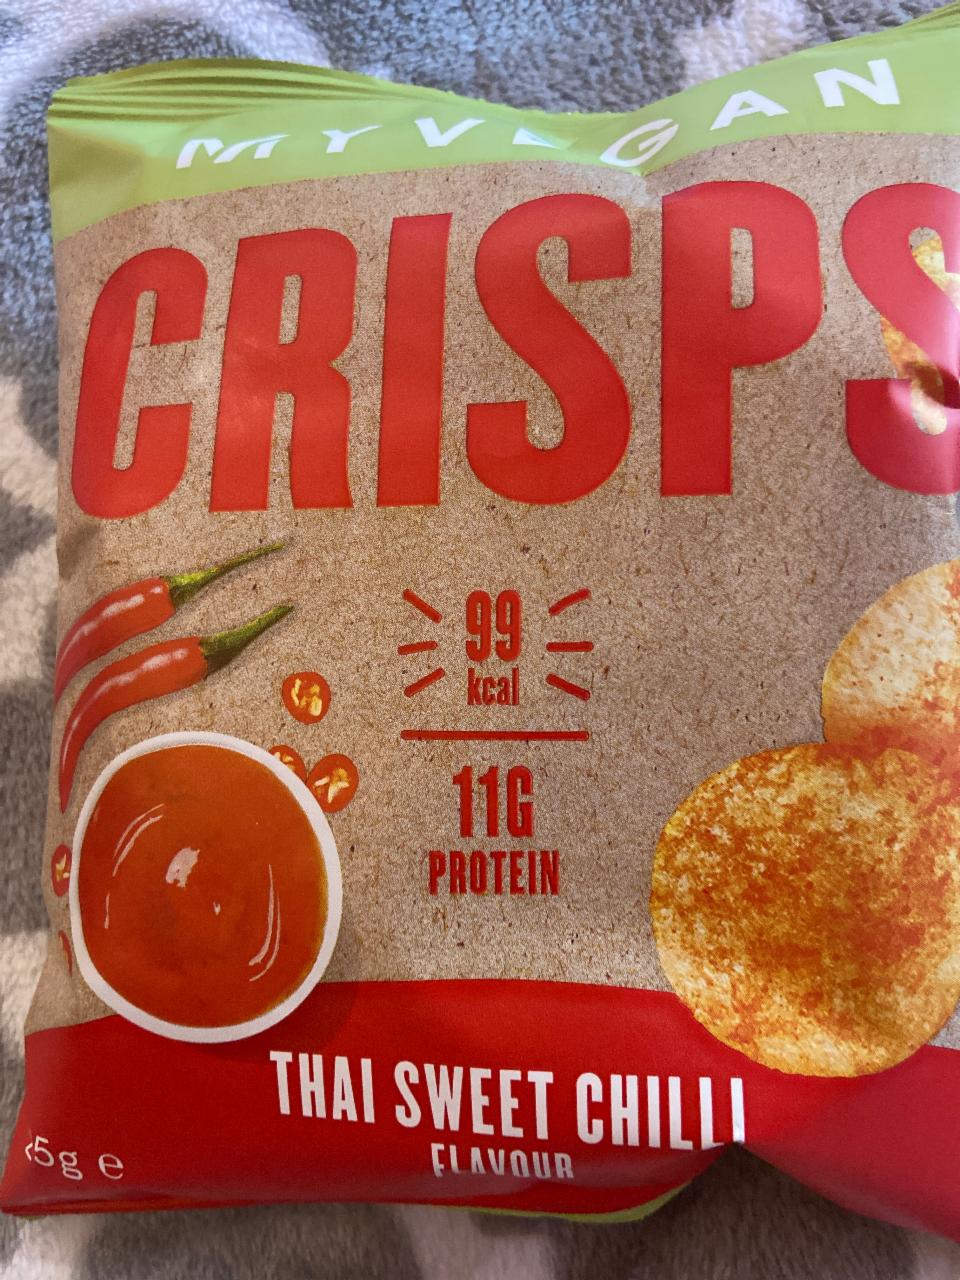 Fotografie - My vegan crisps Thai sweet chilli